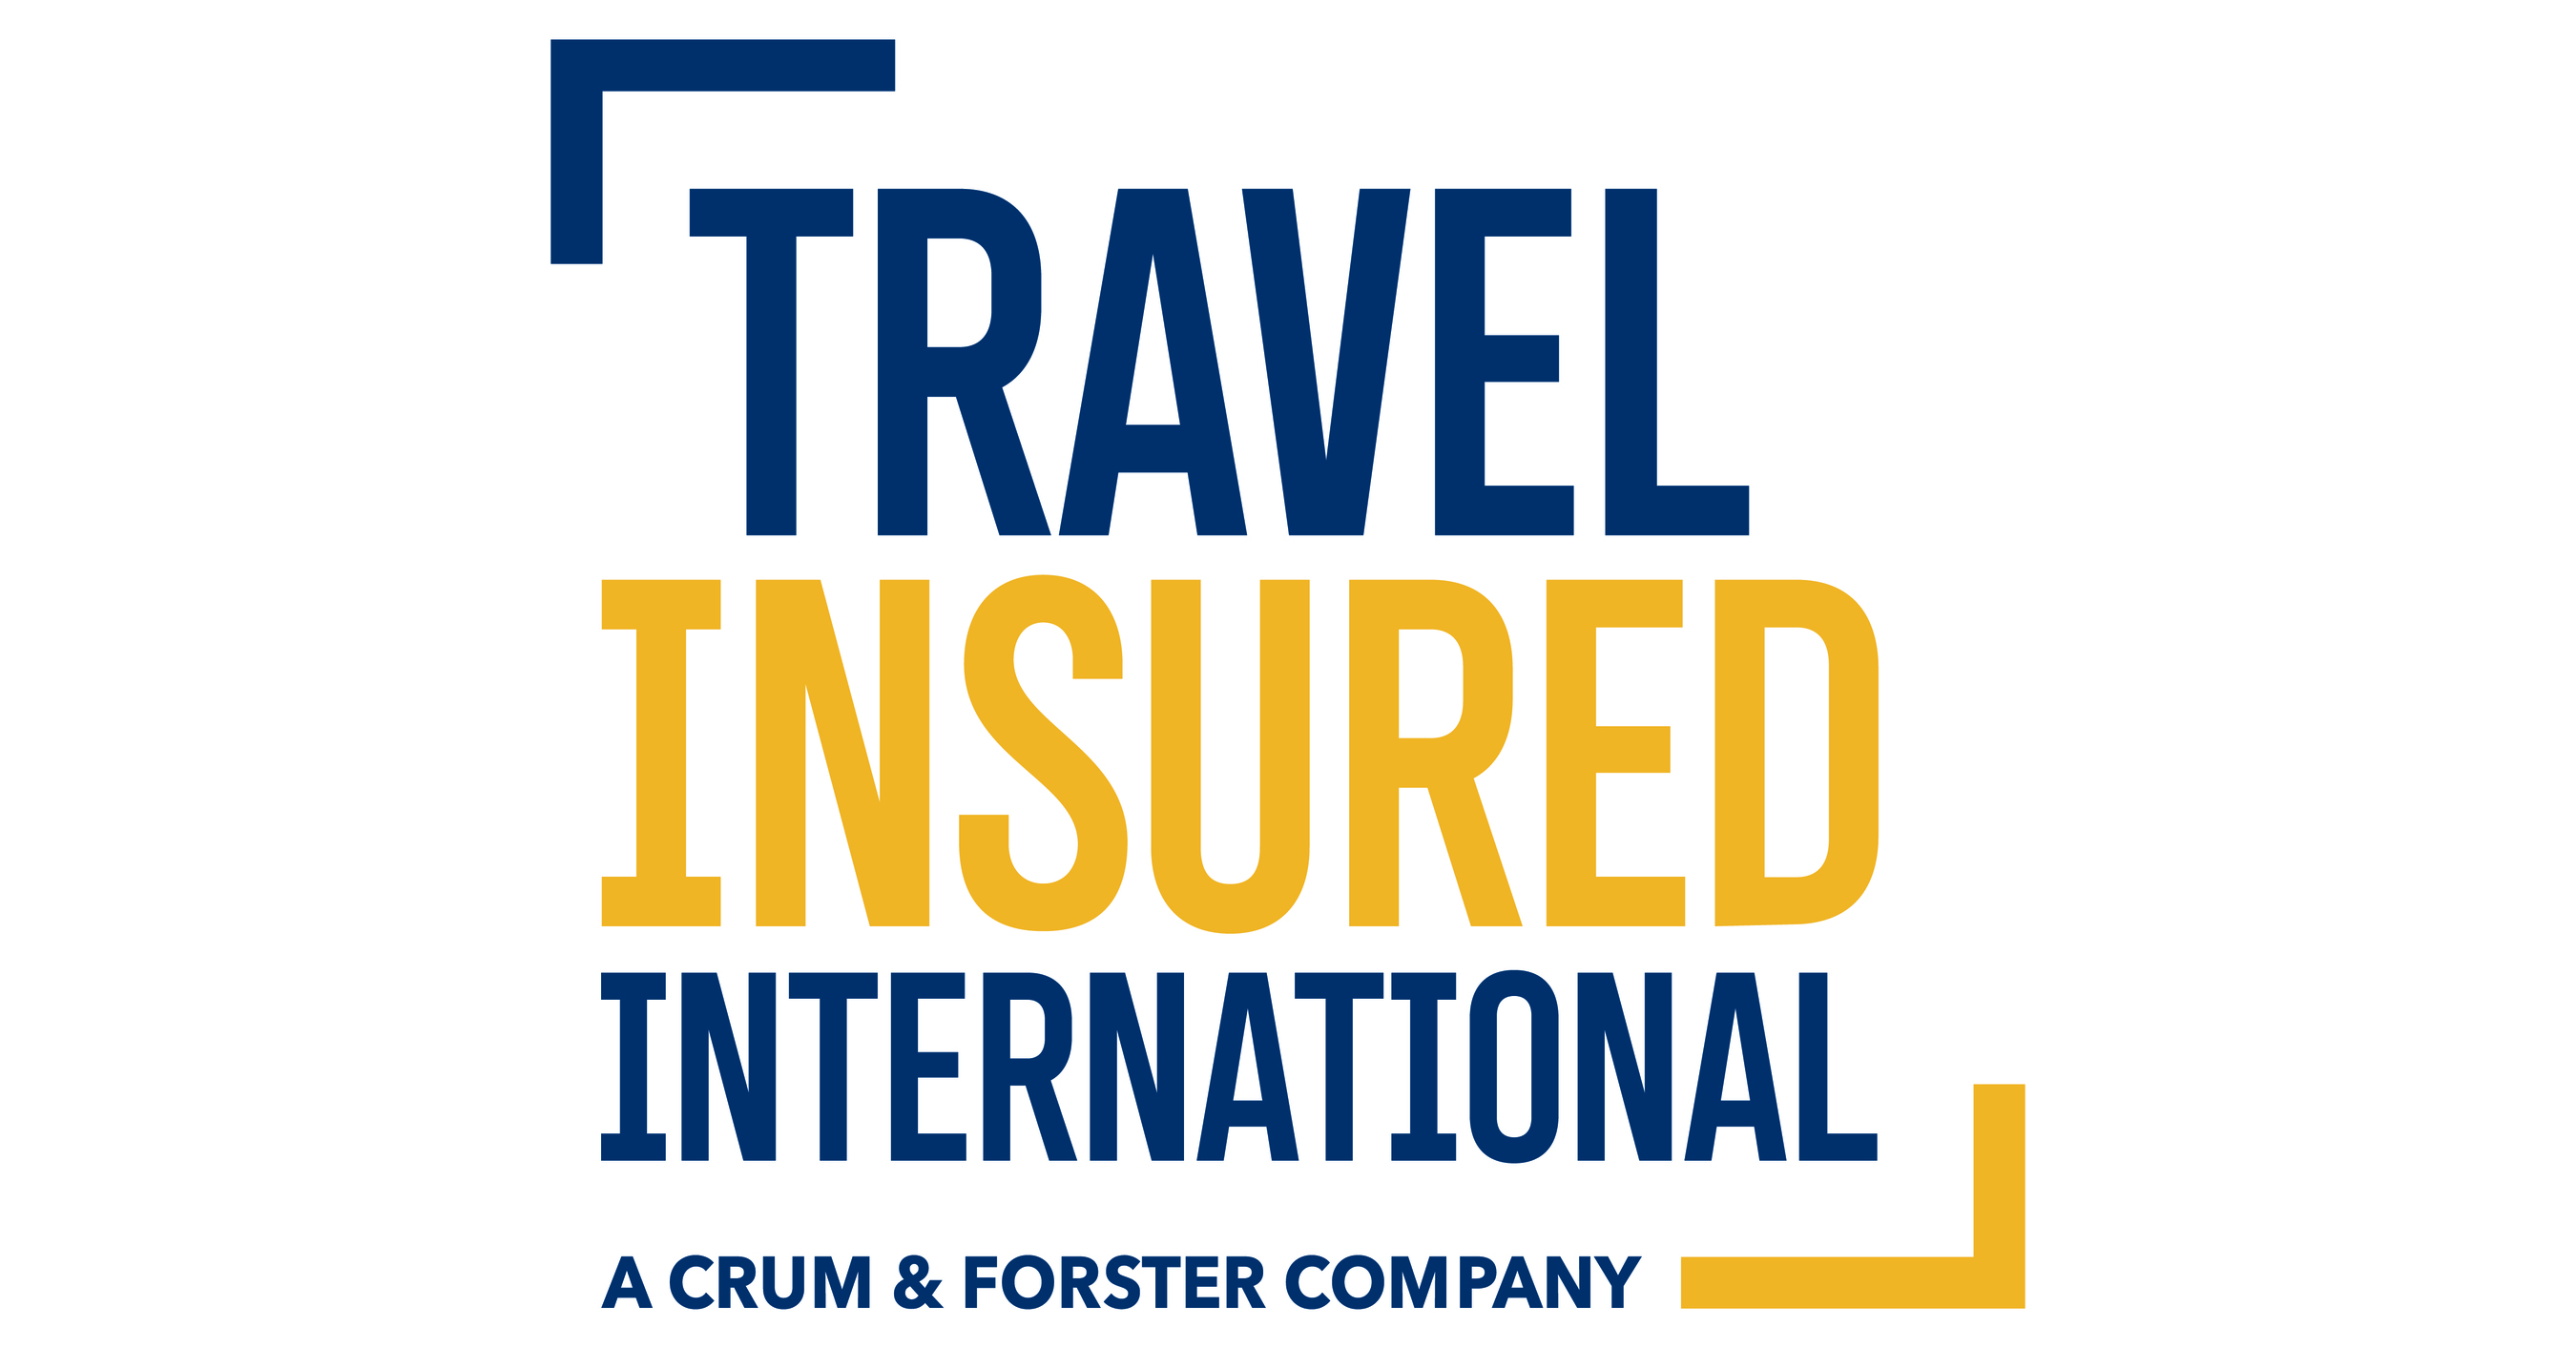 travel insured worldwide trip protector edge